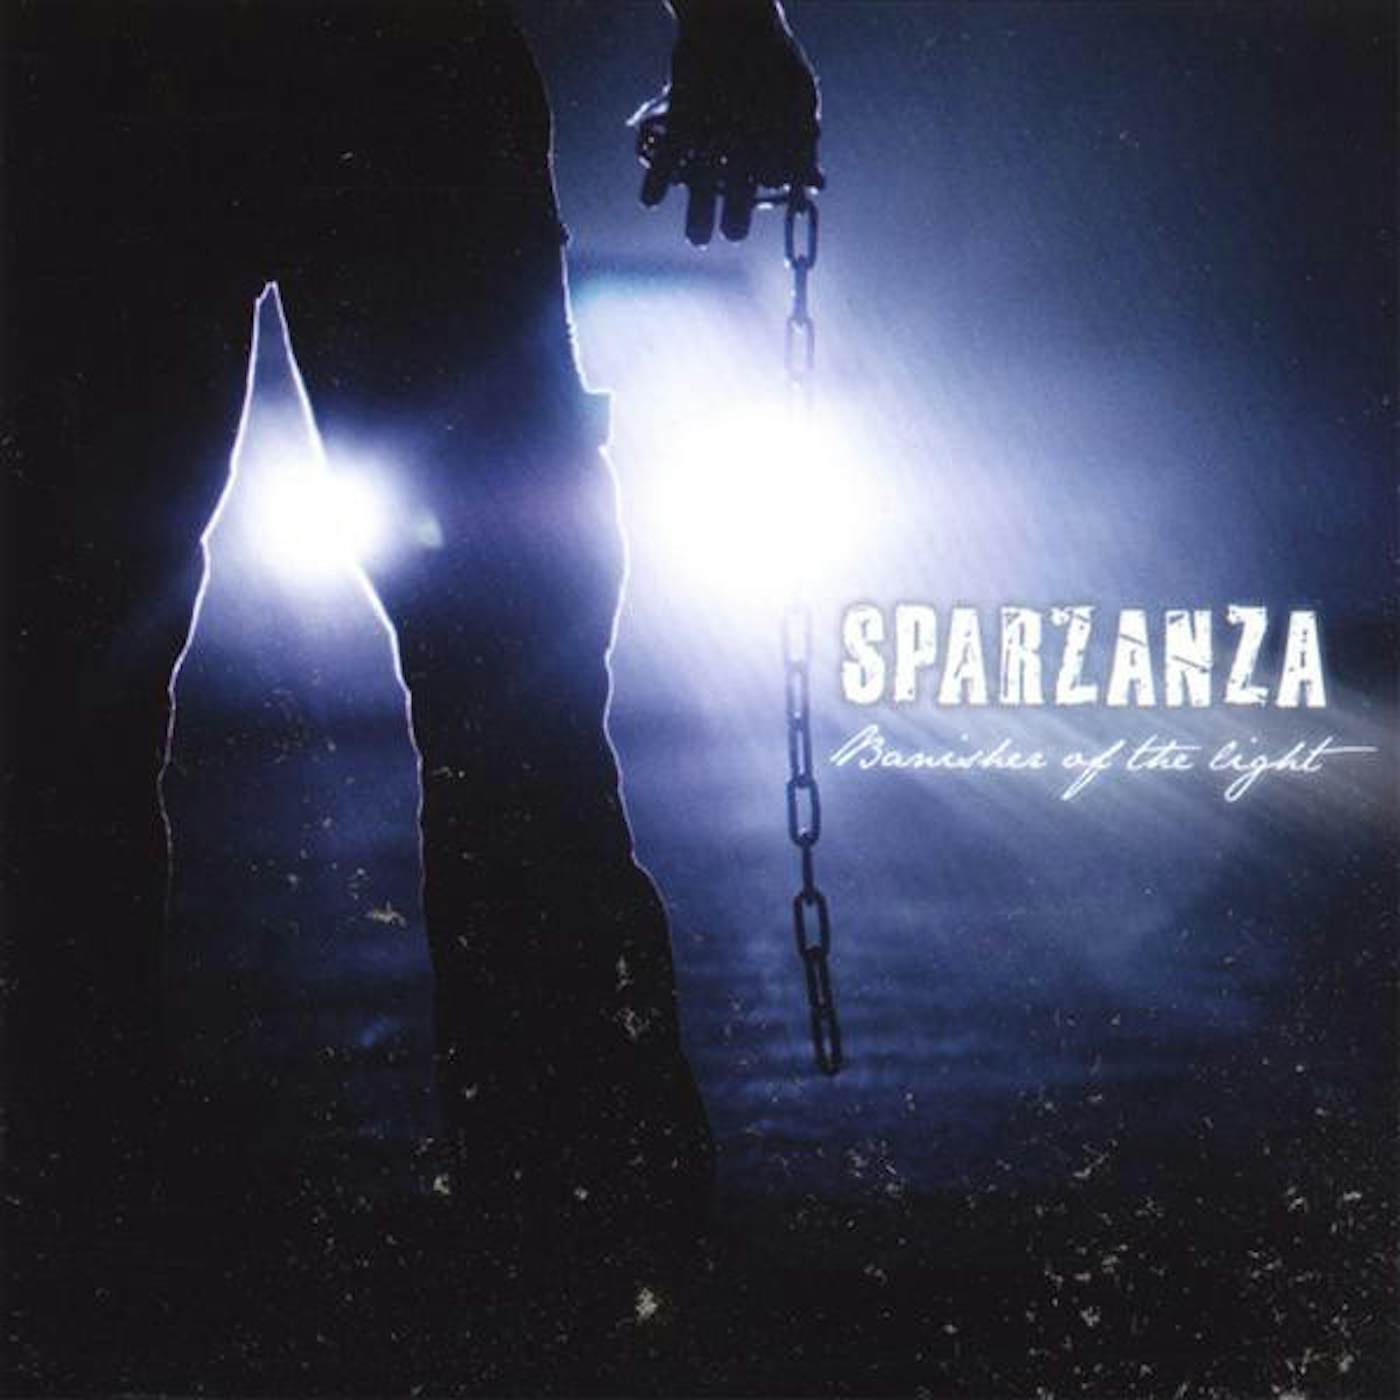 Sparzanza Banisher Of The Light Vinyl Record